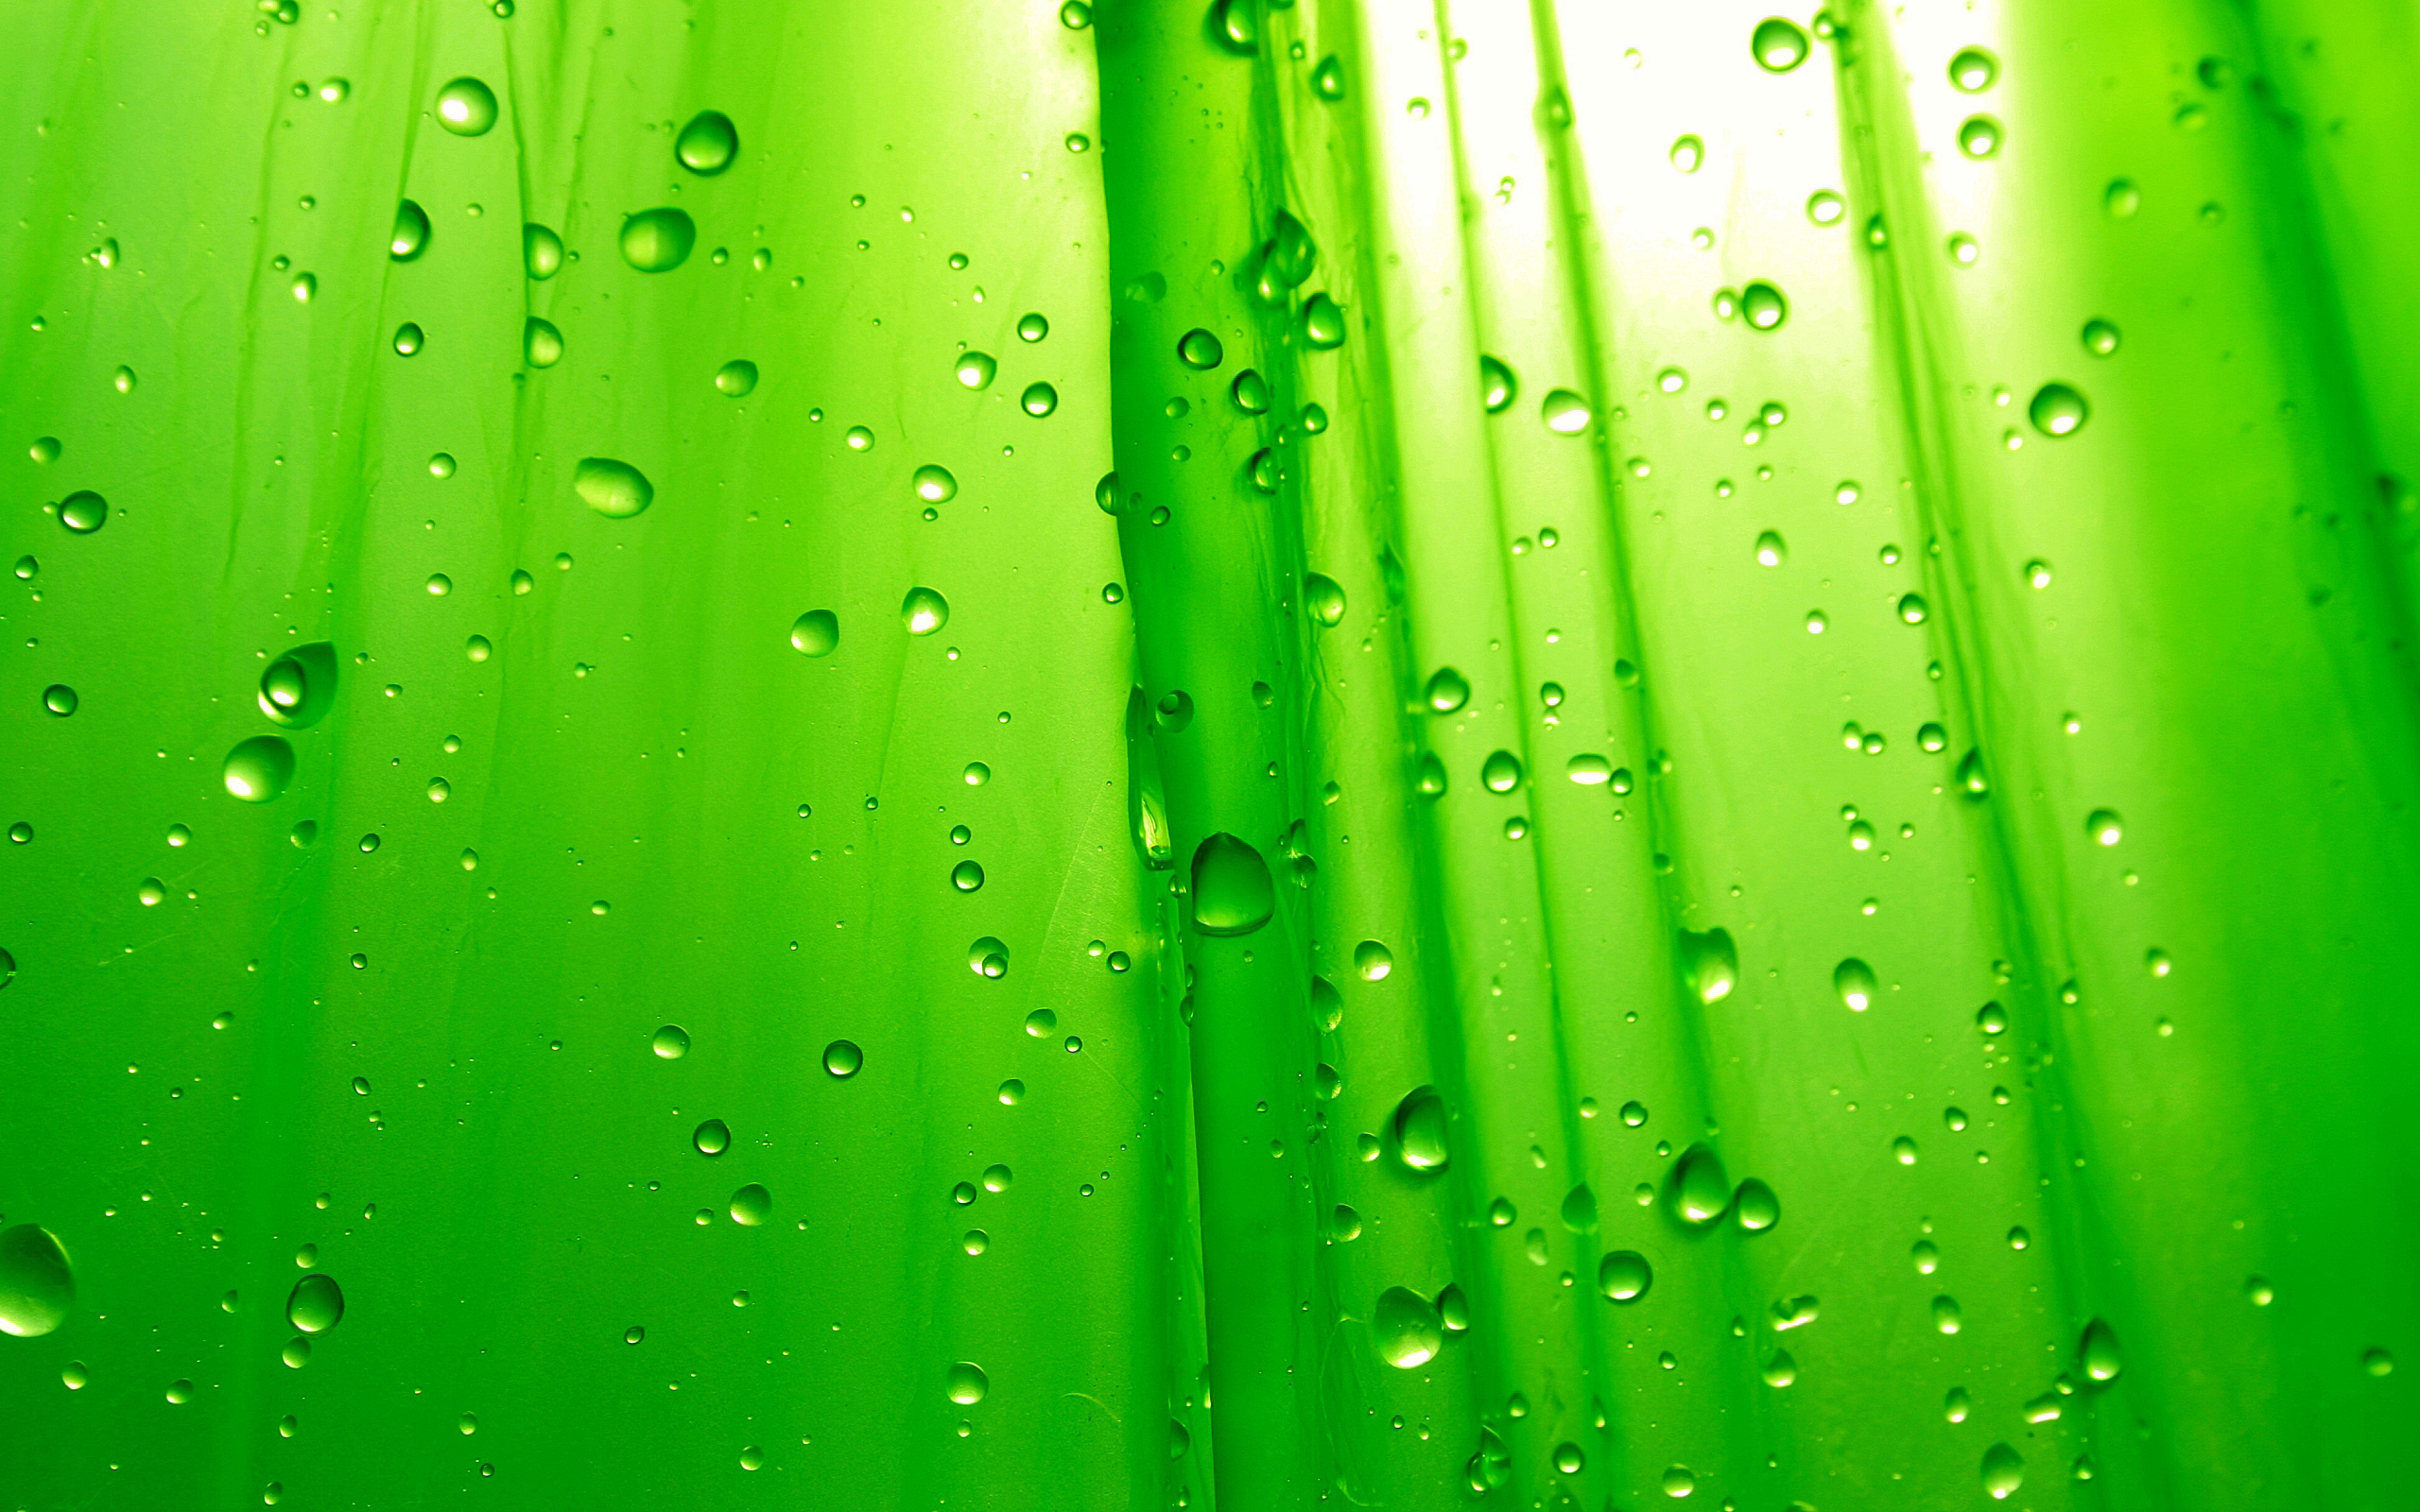 Neon wallpaper   simply green wallpaperjpg Wallpapers   HD Wallpapers